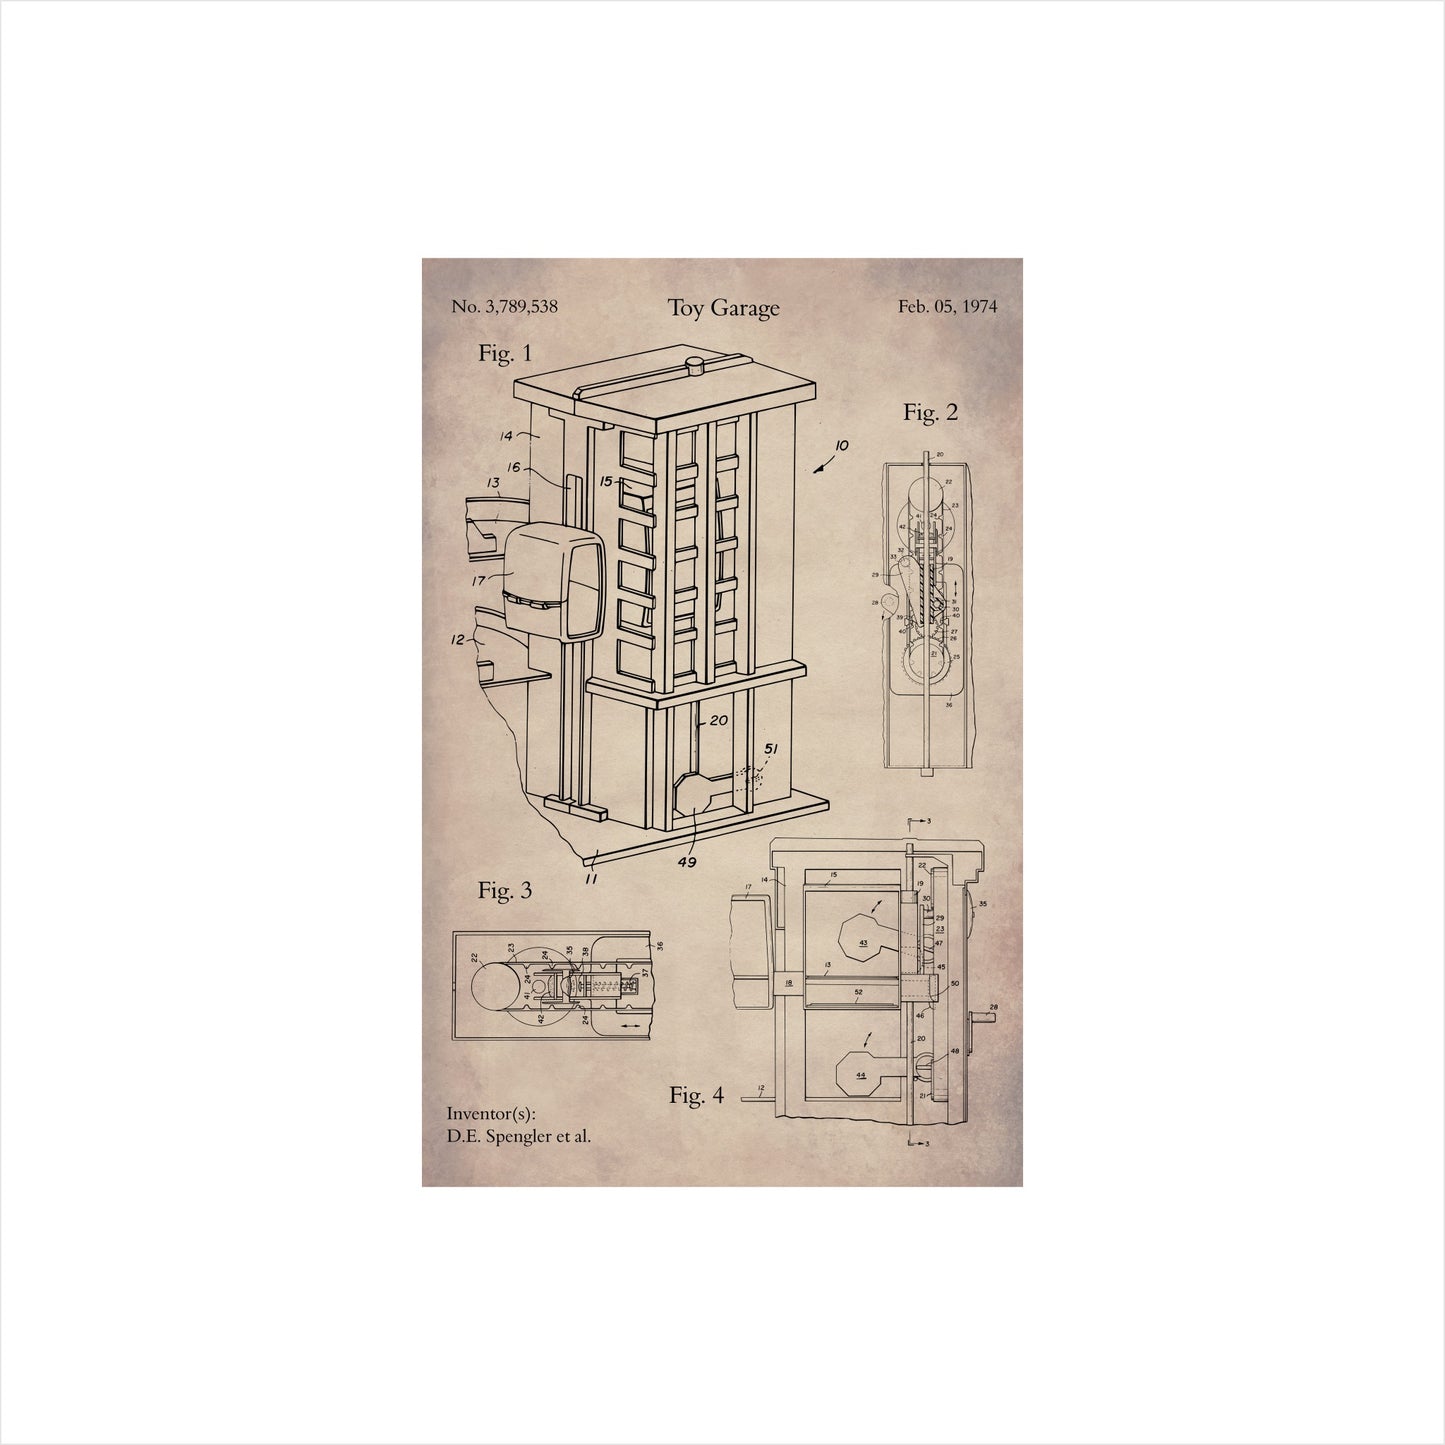 Retro Toy Garage Patent Art Print